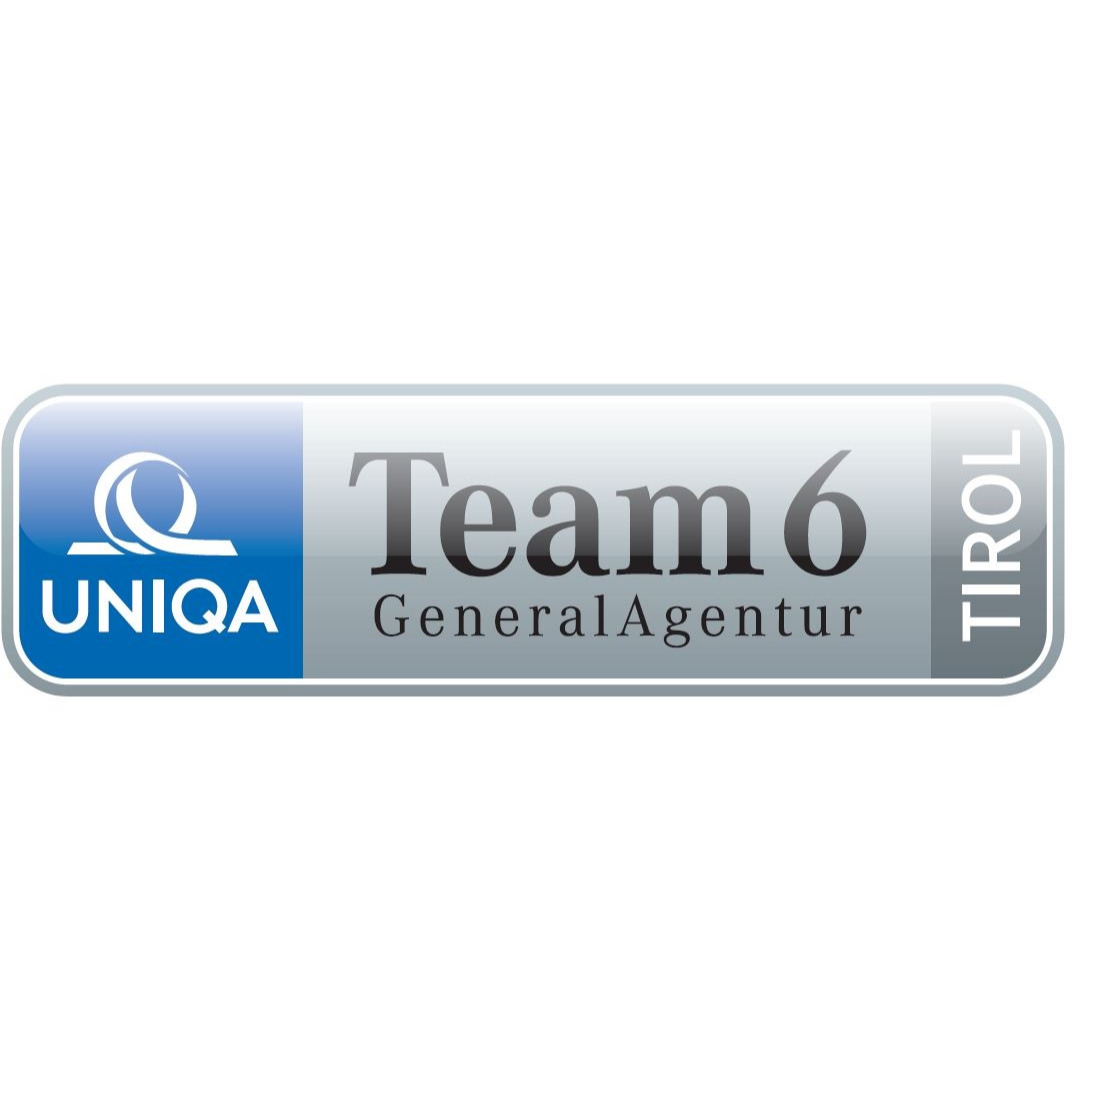 Uniqa GeneralAgentur Team 6 - Fagschlunger Spielmann Engl OG, KFZ- Zulassungsstelle Logo Uniqa GeneralAgentur Team 6 - Fagschlunger Spielmann Engl OG Zulassungsstelle Innsbruck 0512 283171